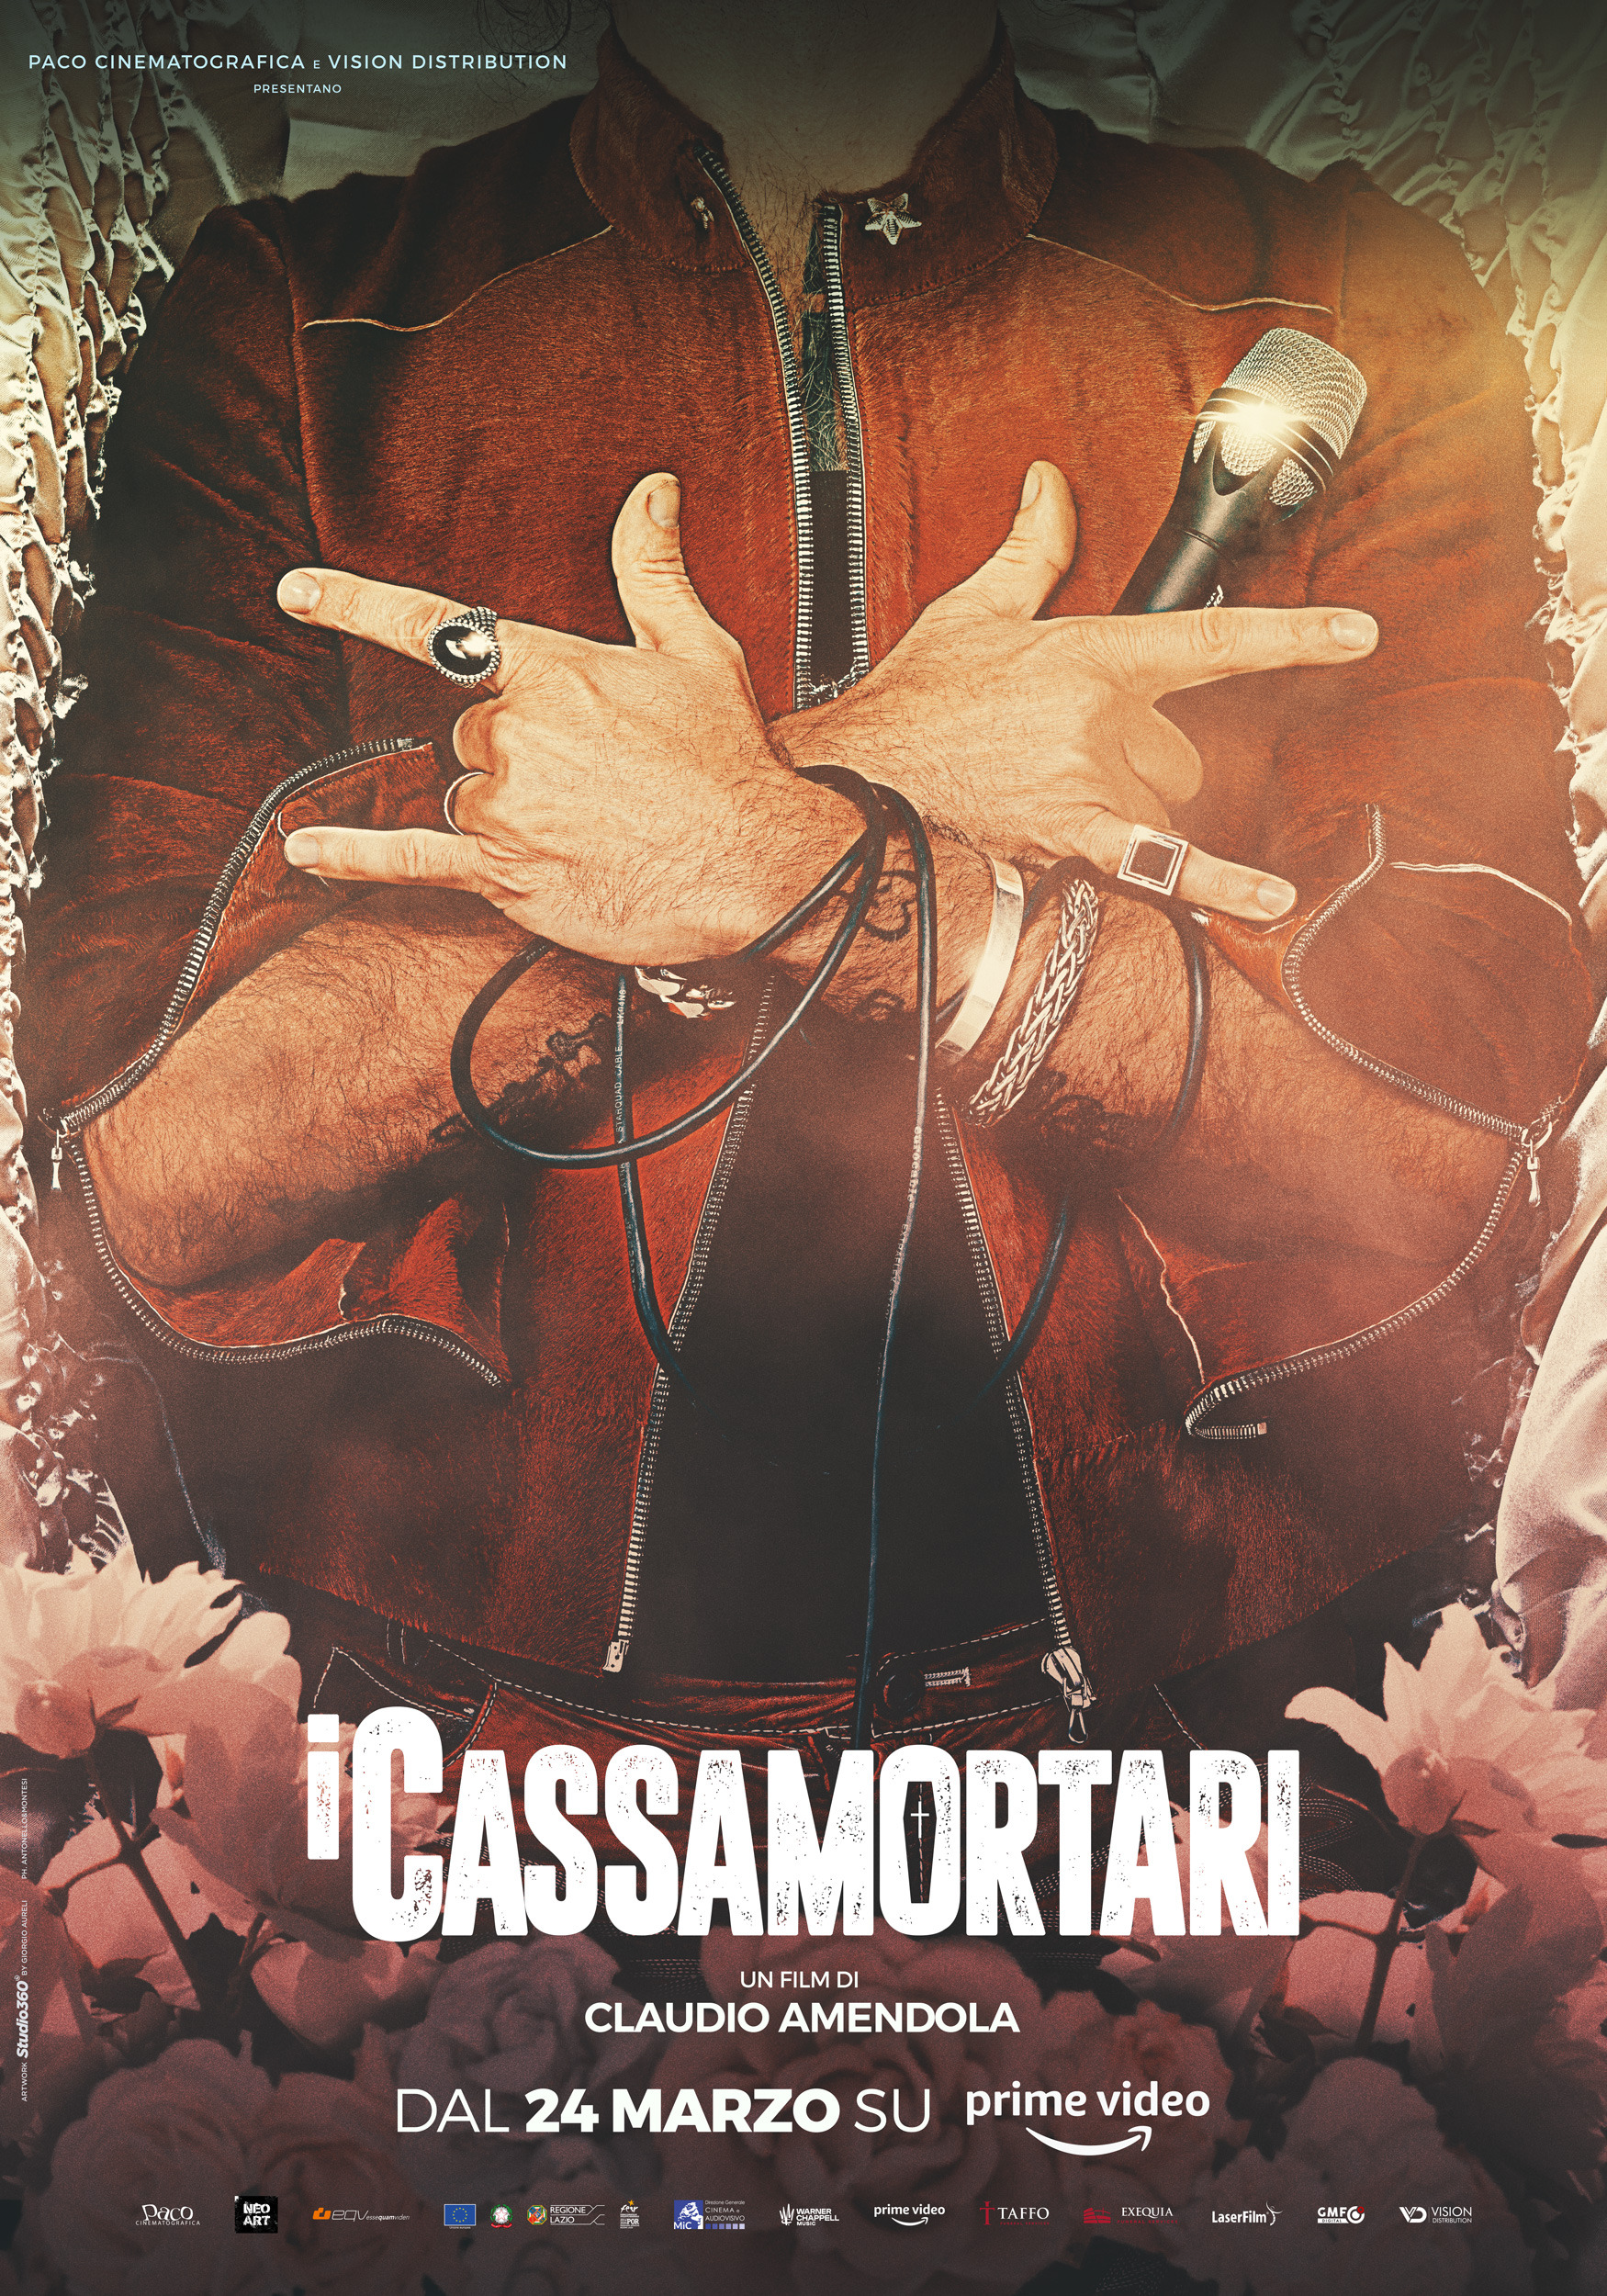 Mega Sized Movie Poster Image for I cassamortari (#1 of 2)